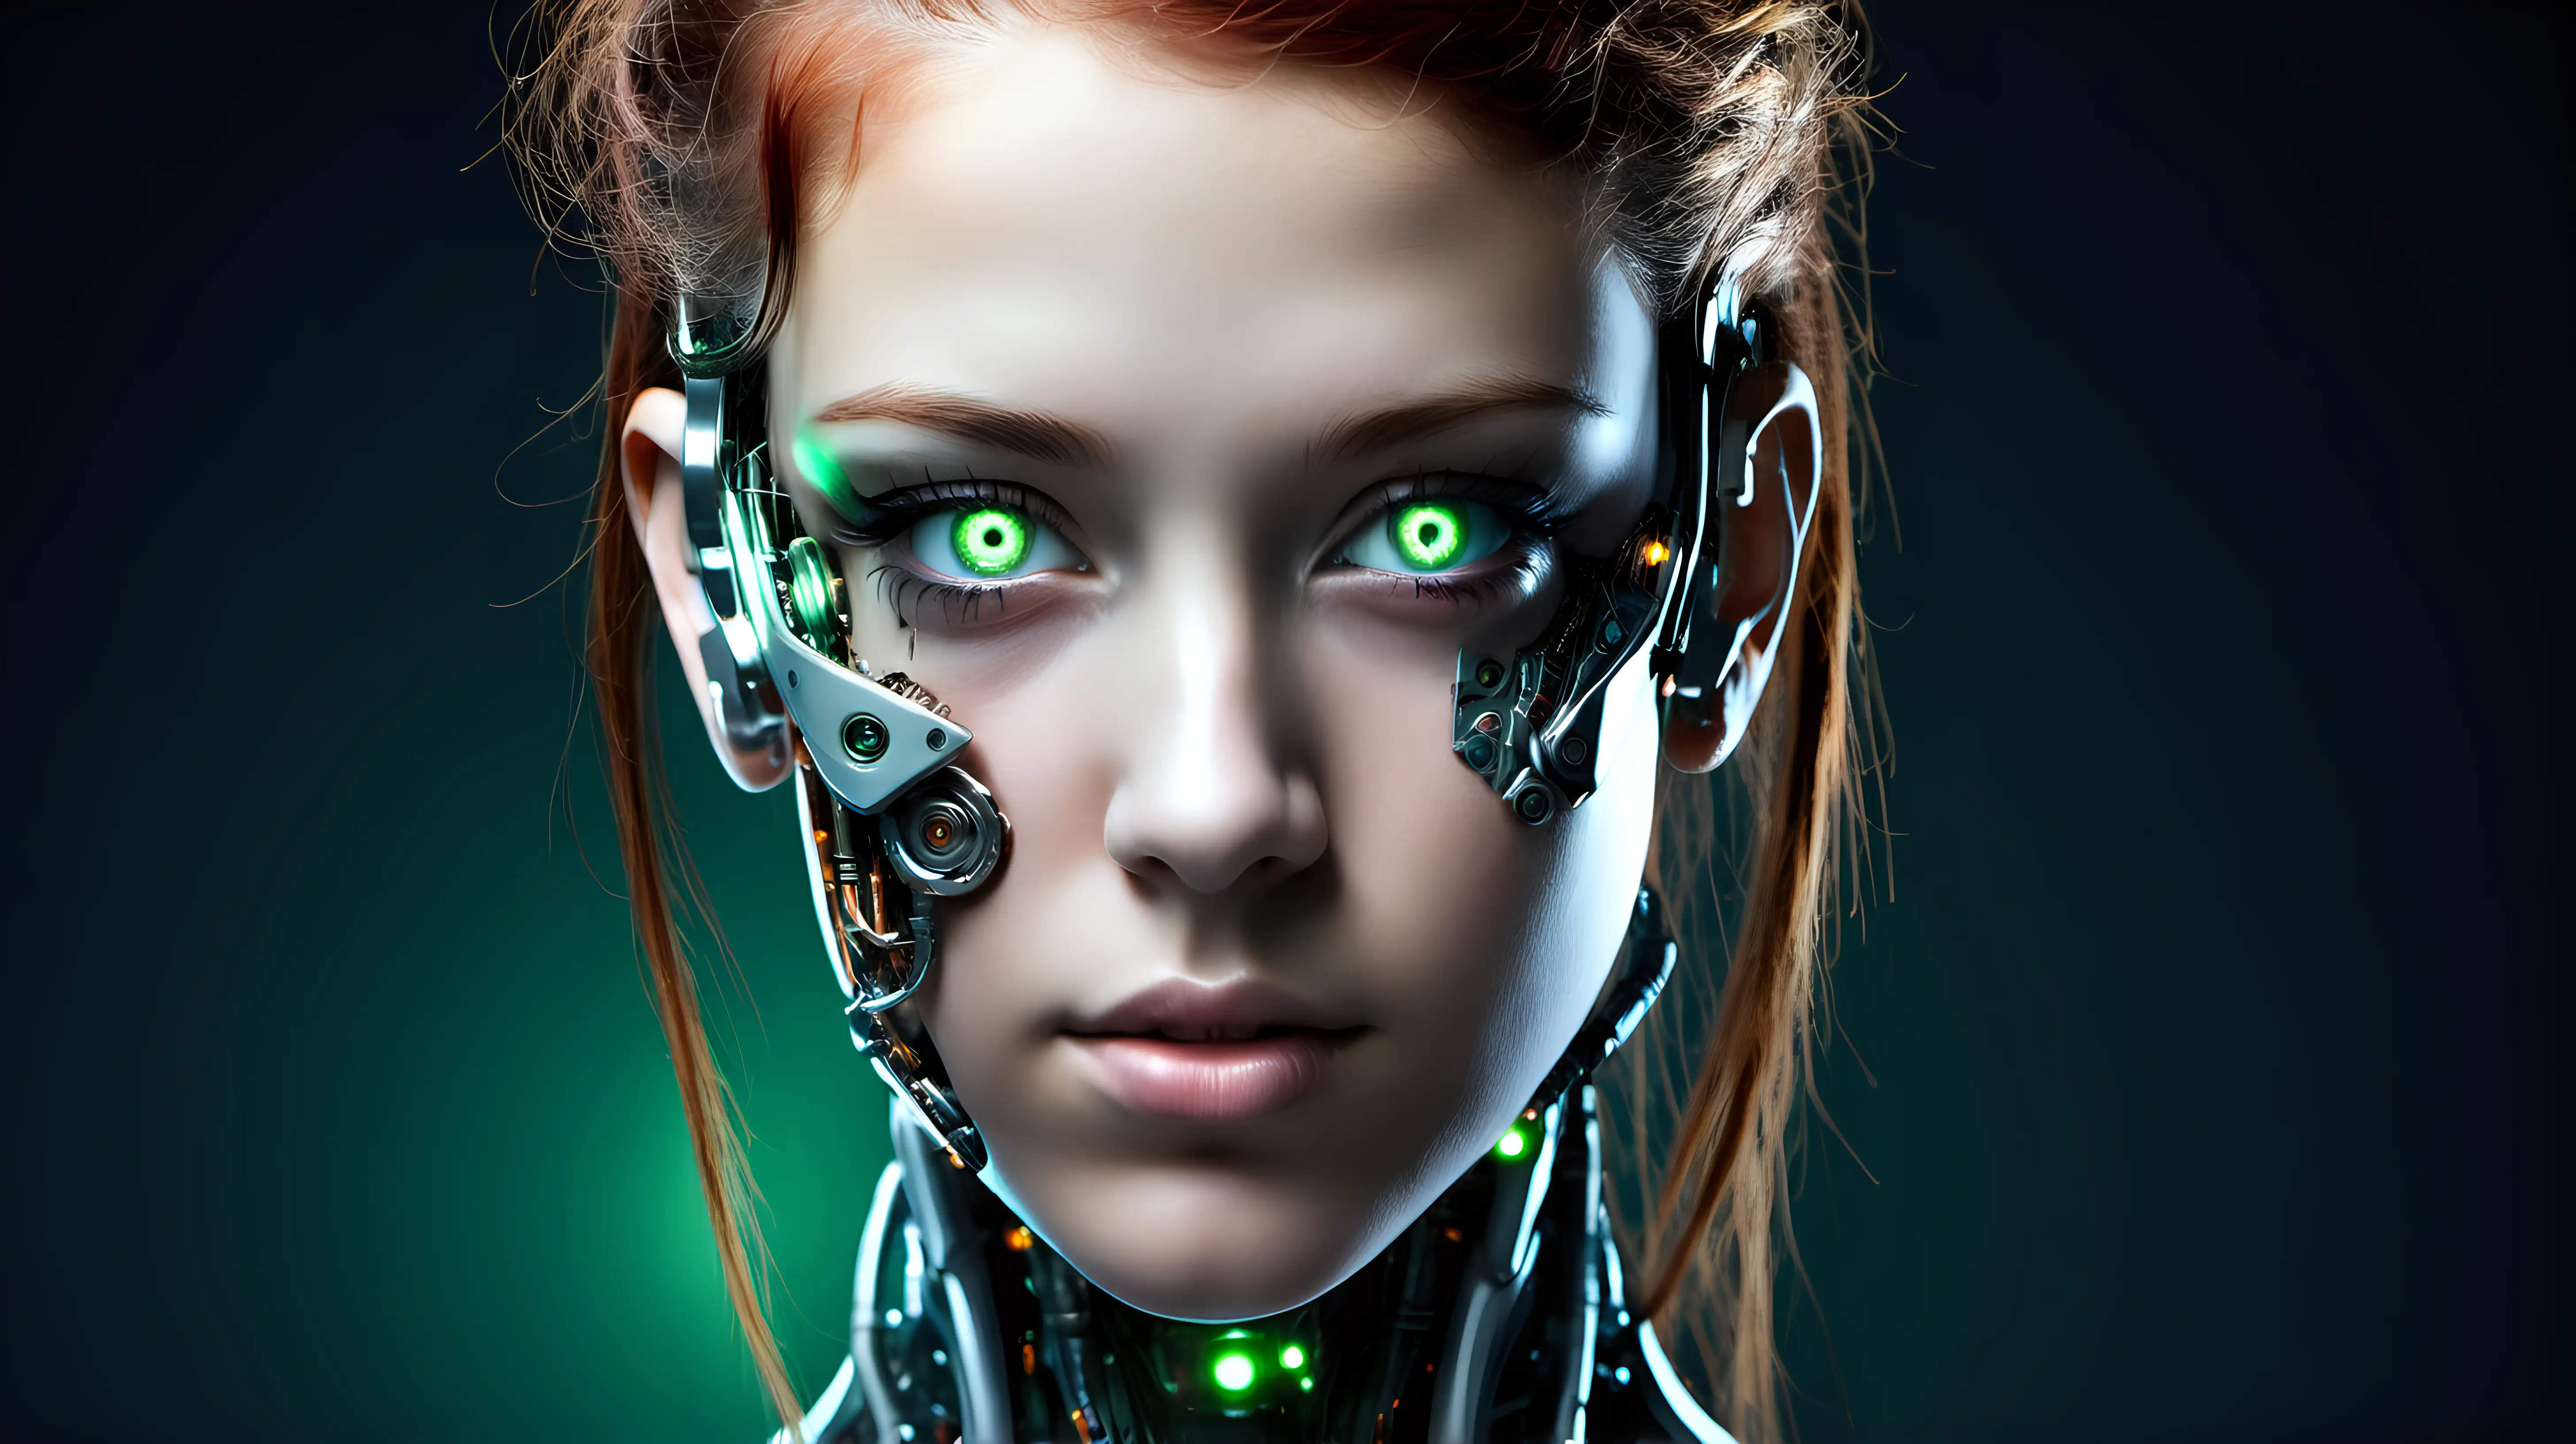 Beautiful Cyborg Woman with Enchanting Green Eyes